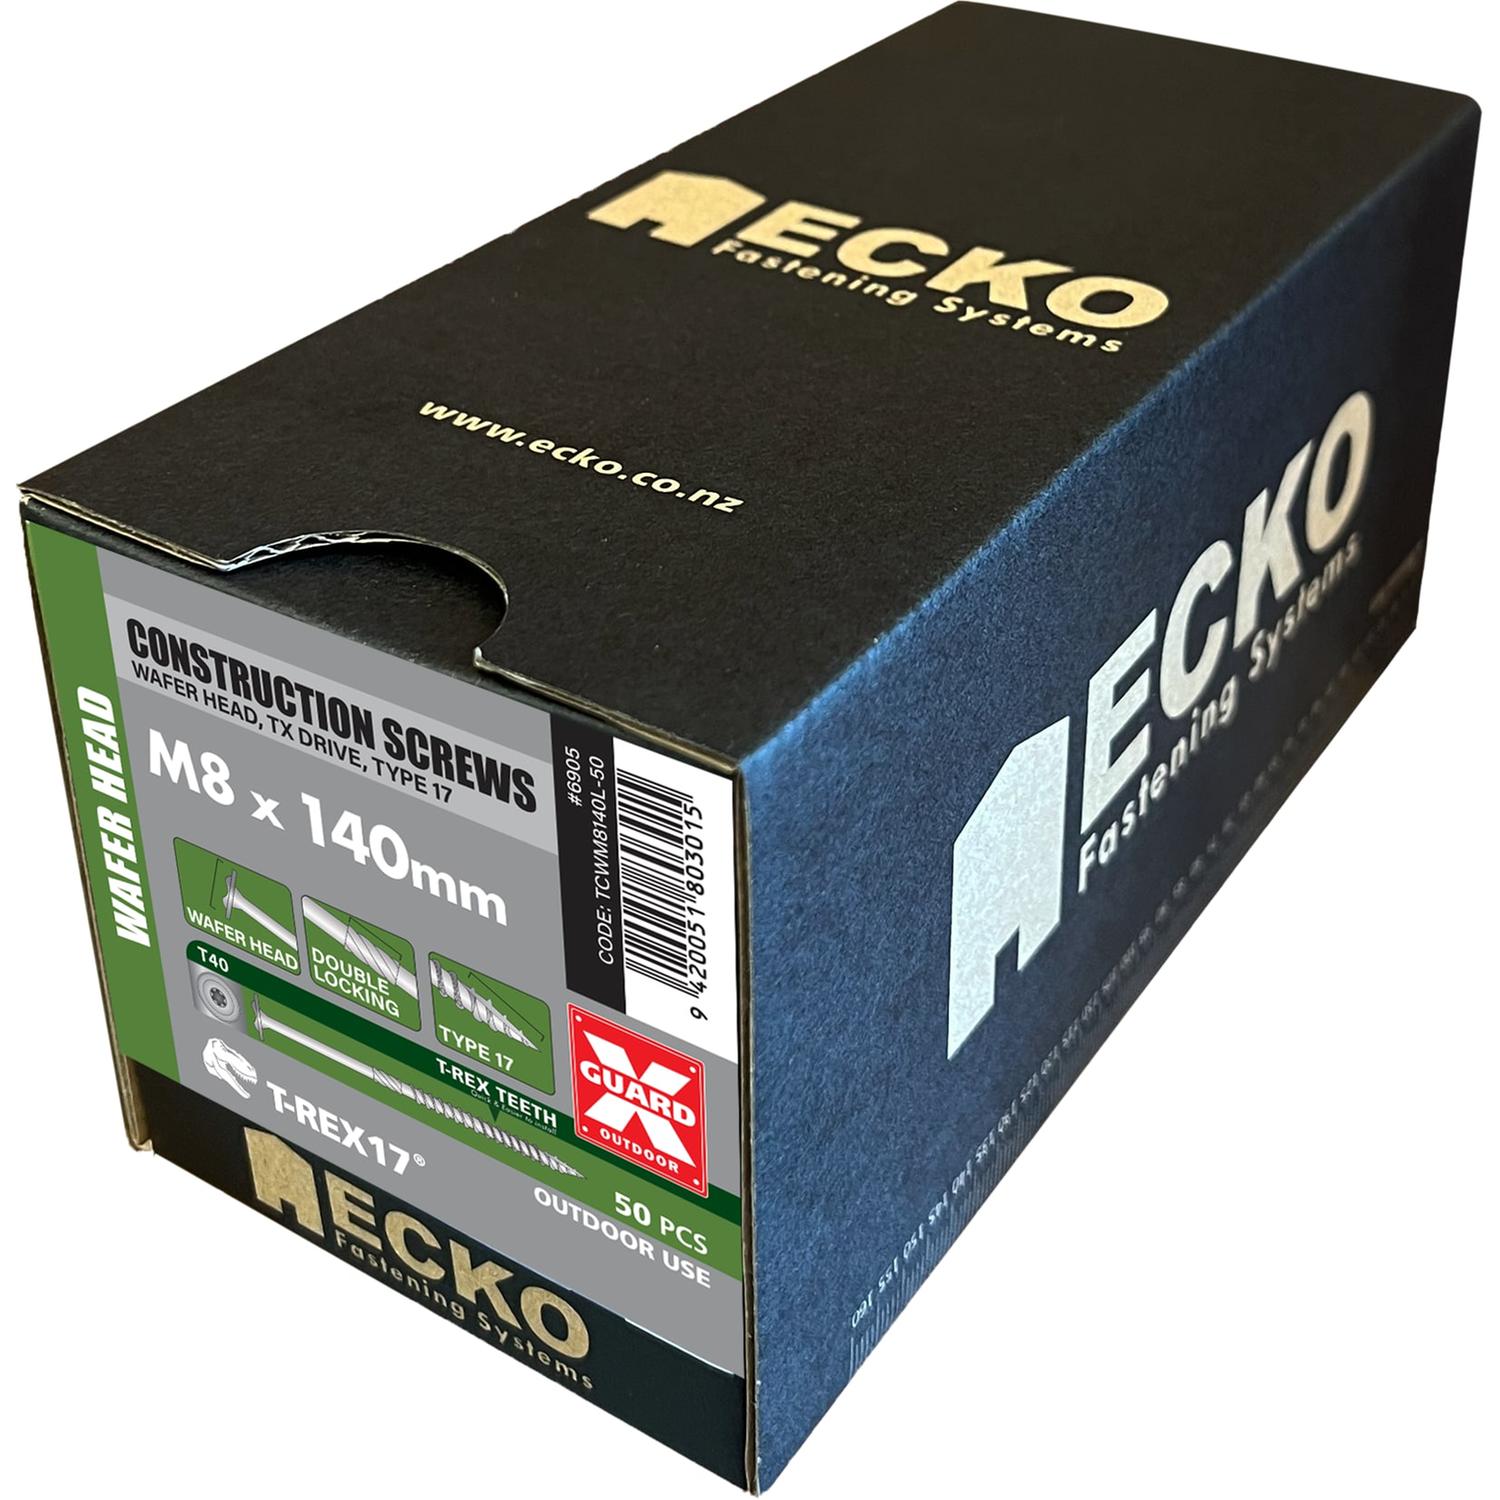 Ecko T-Rex17 Construction Screws M8 X 140Mm (500 Pack)